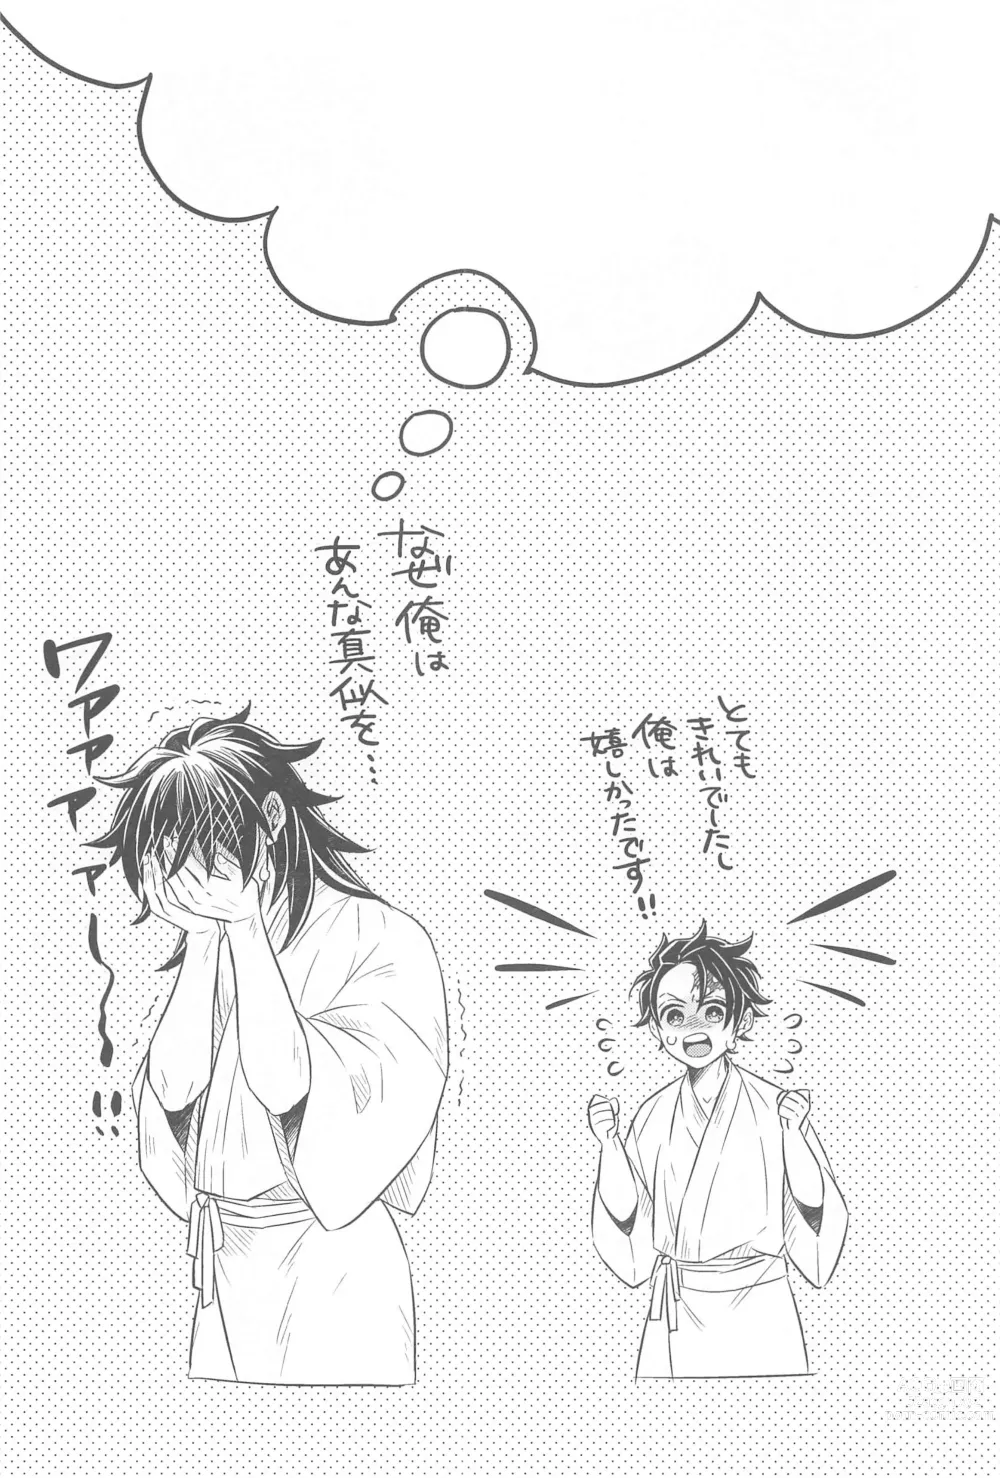 Page 21 of doujinshi Shoya no Yokuasa - the morning after the first night